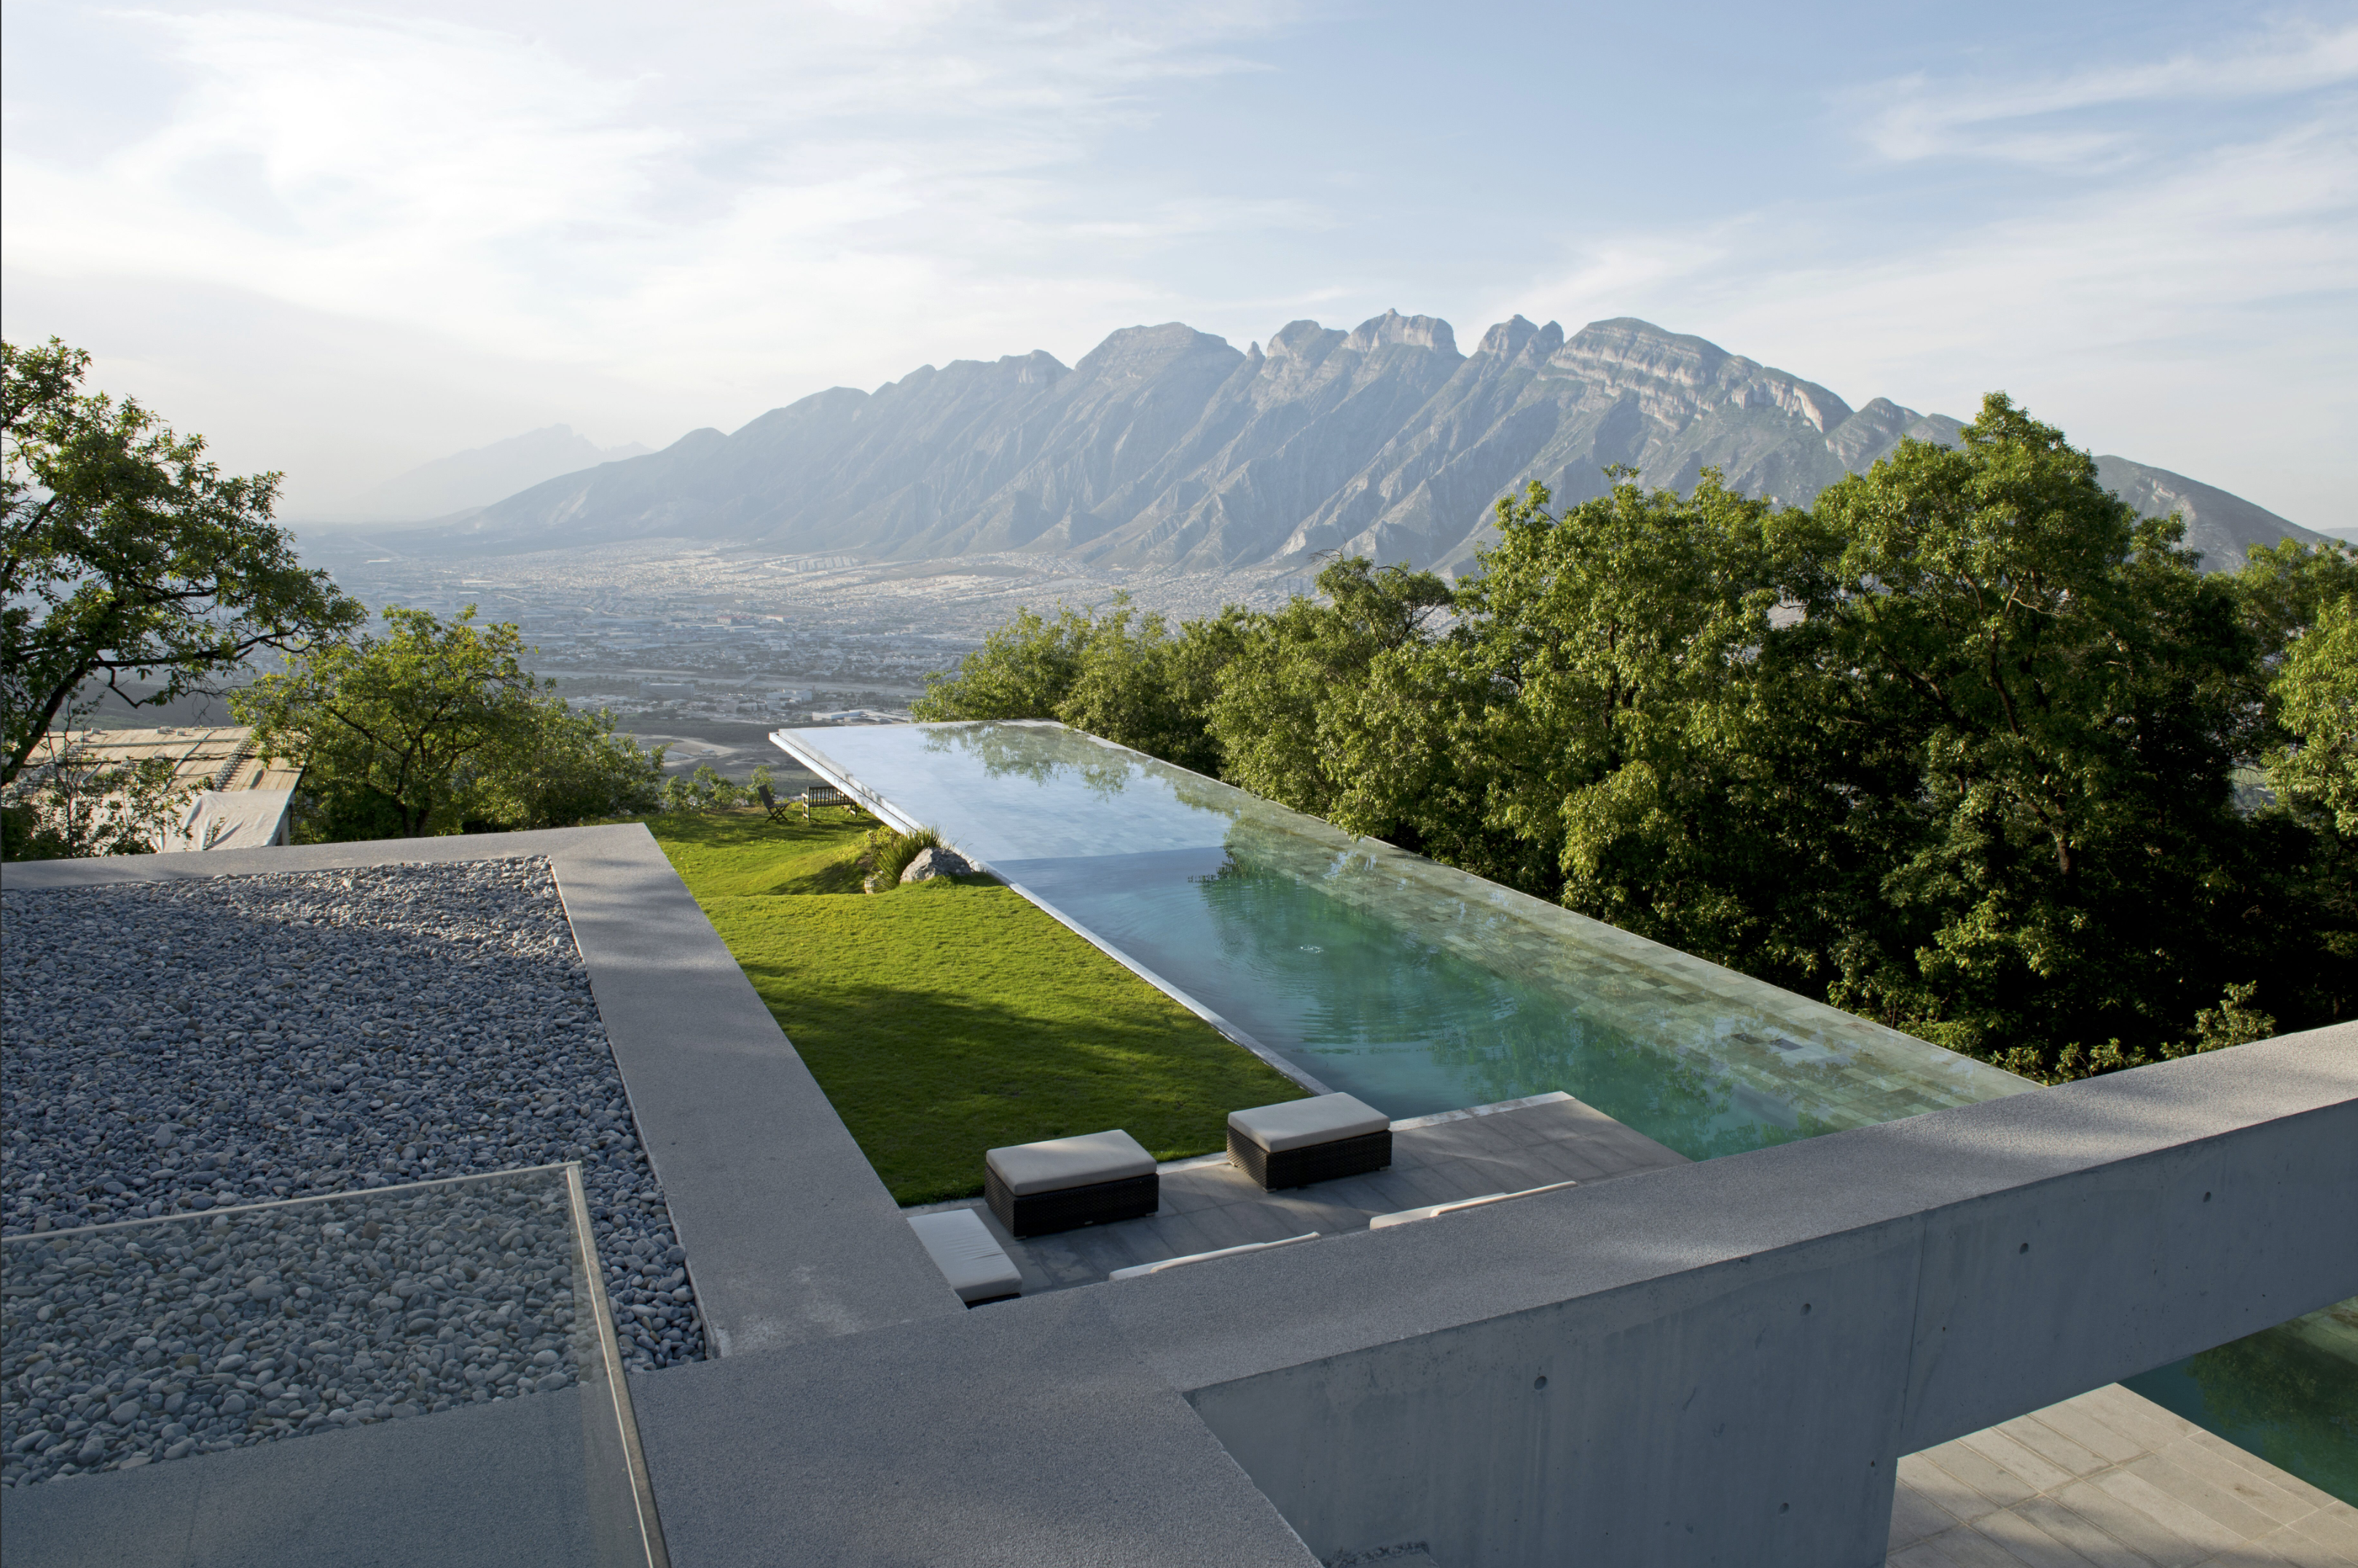 Residence, Monterrey, Mexico, Tadao Ando architect, 2014